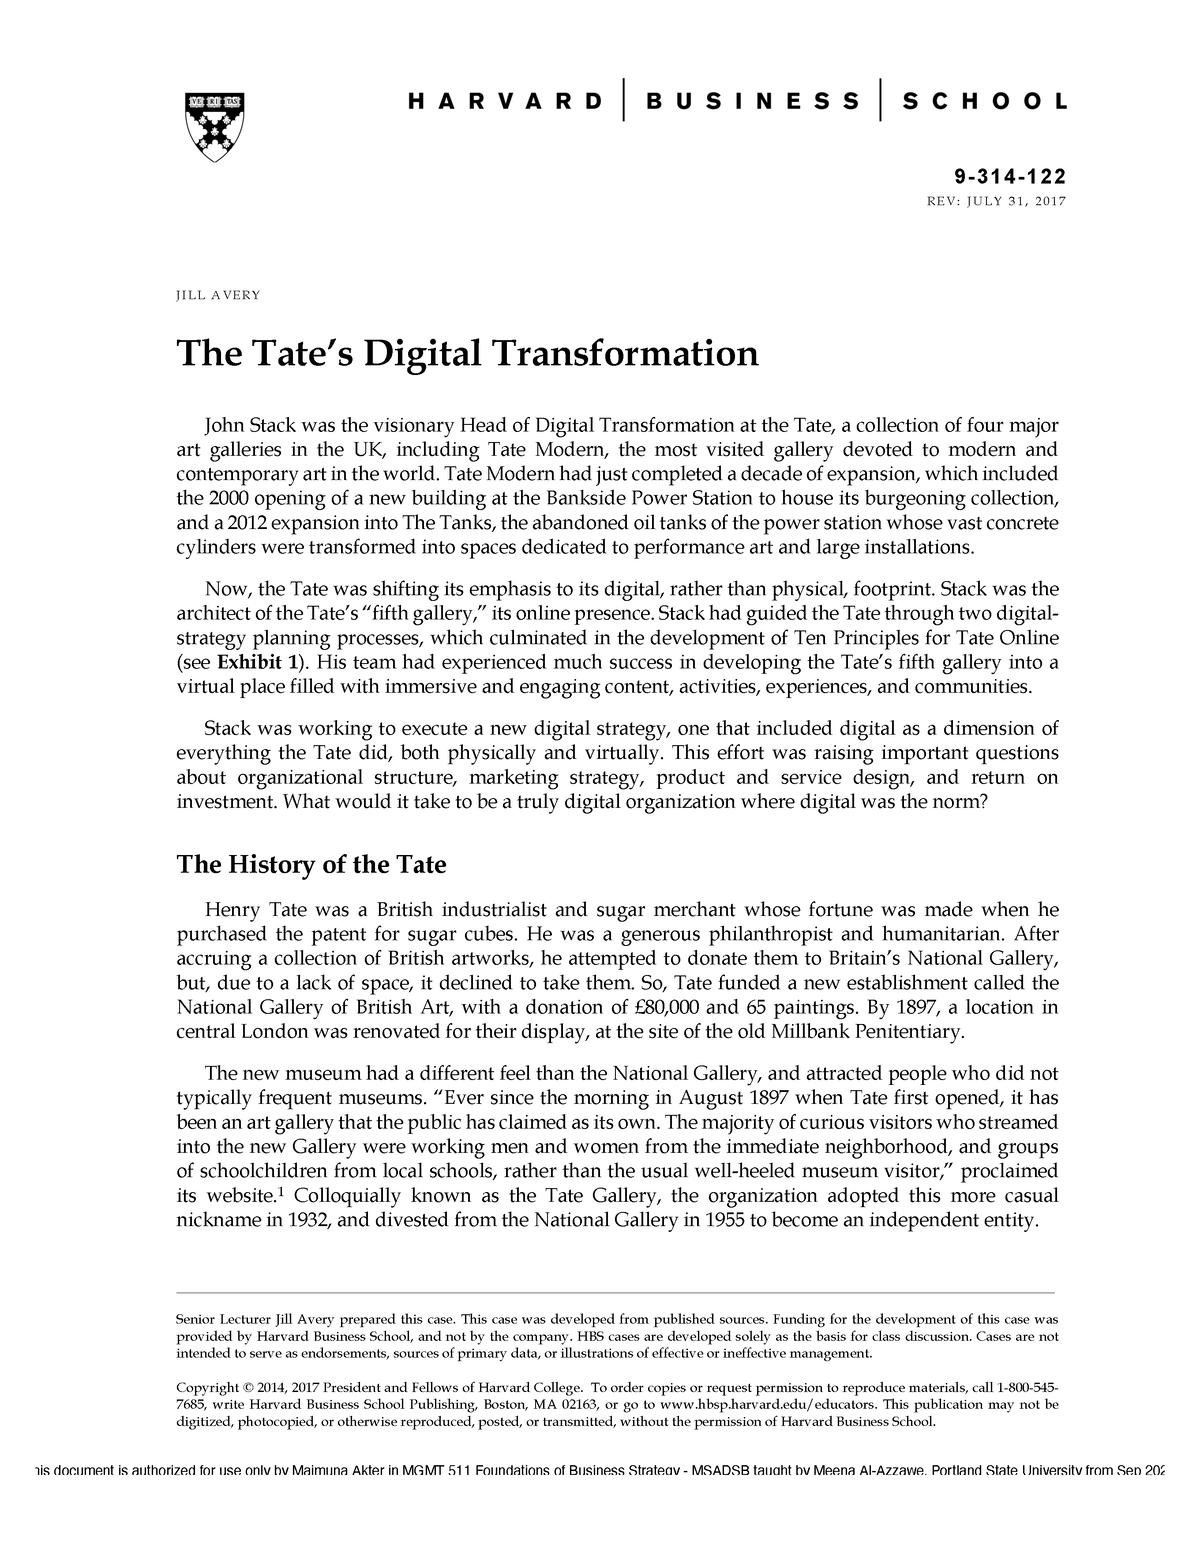 tate digital transformation case study